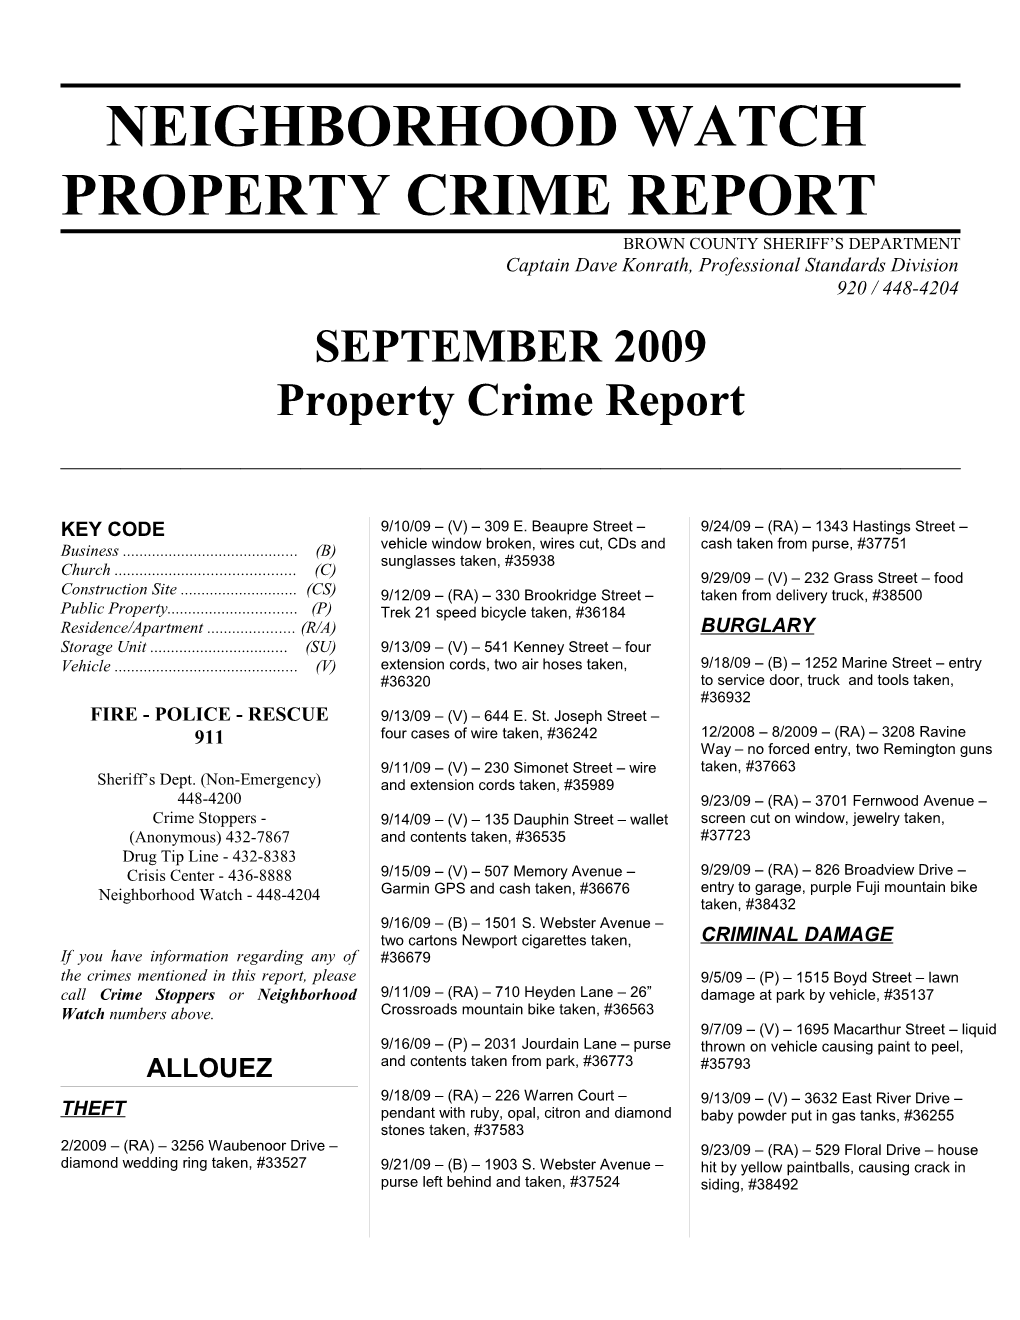 NEIGHBORHOOD Crime Report for April